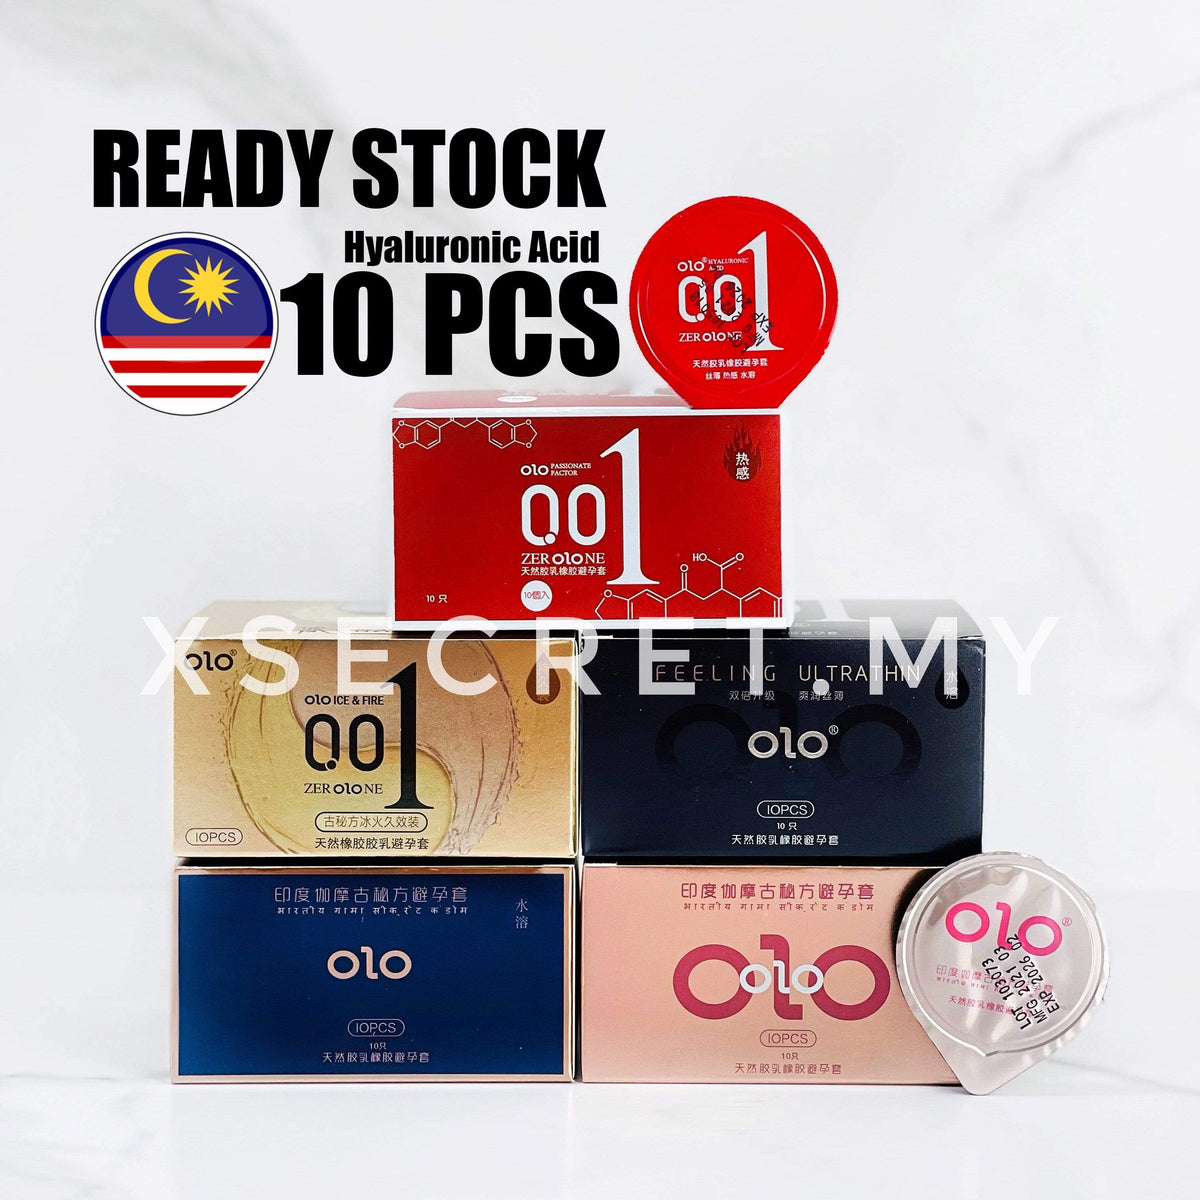 OLO 001 安全套 10Pcs Kondom 0.01mm 最薄持久 OLO 0.01 安全套超薄避孕套水基天然乳胶 Kondom Tahan Lama